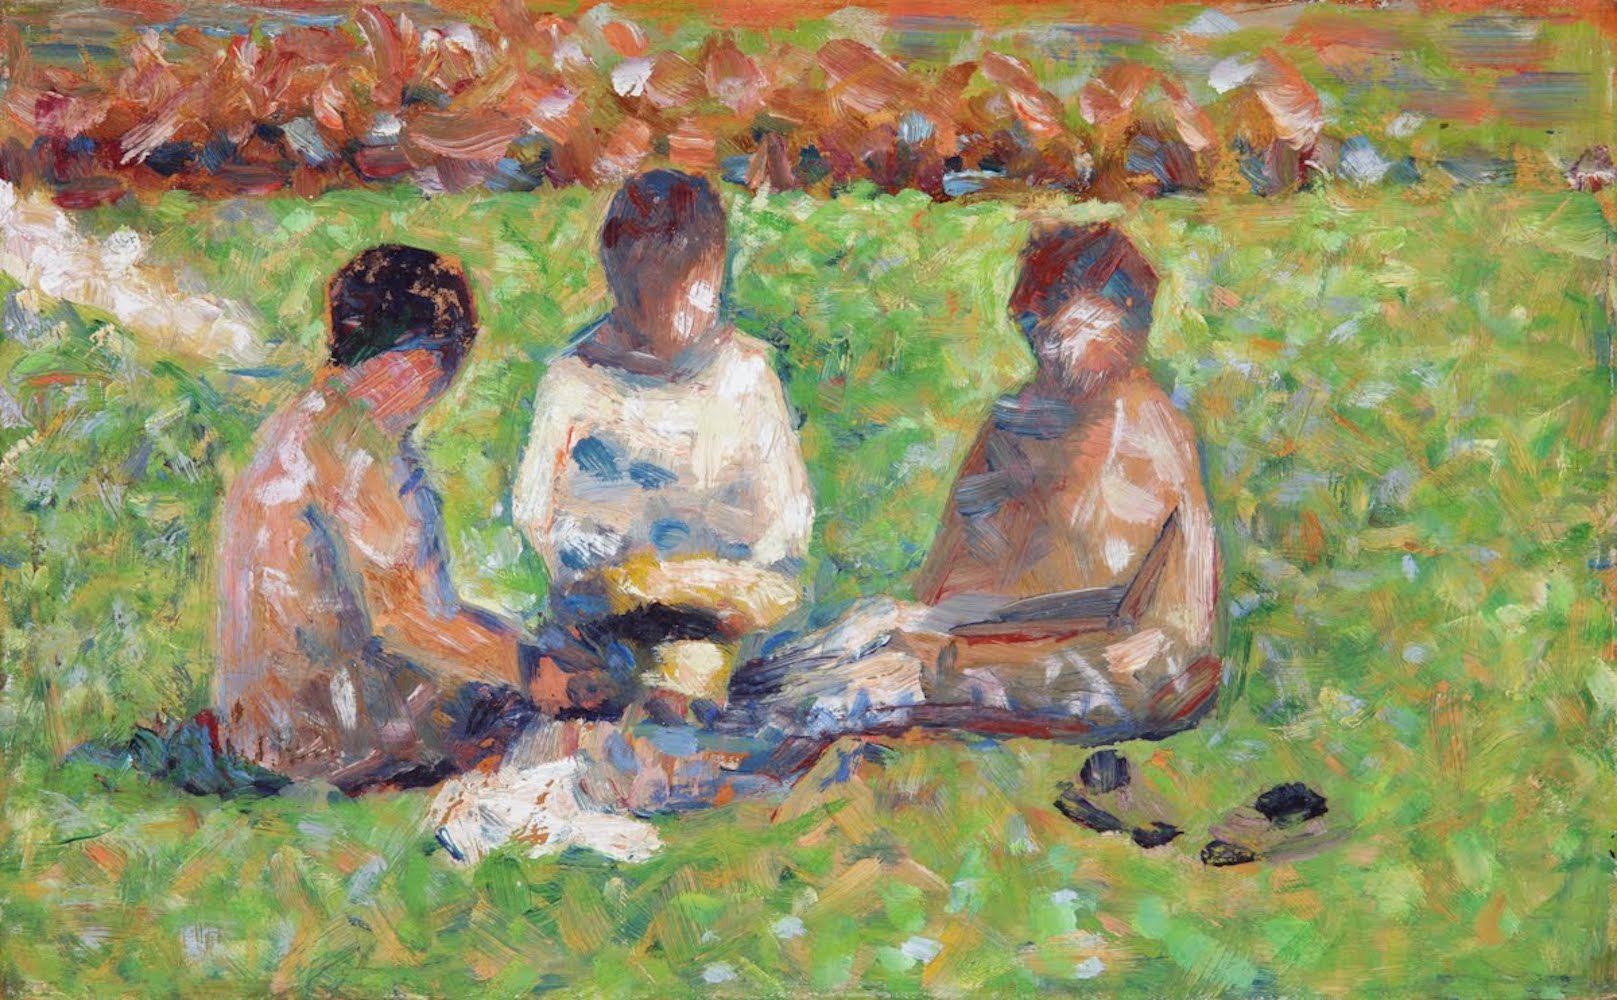 El picnic by Georges Seurat - c. 1885 - 15.9 × 25.4 cm Dixon Gallery and Gardens